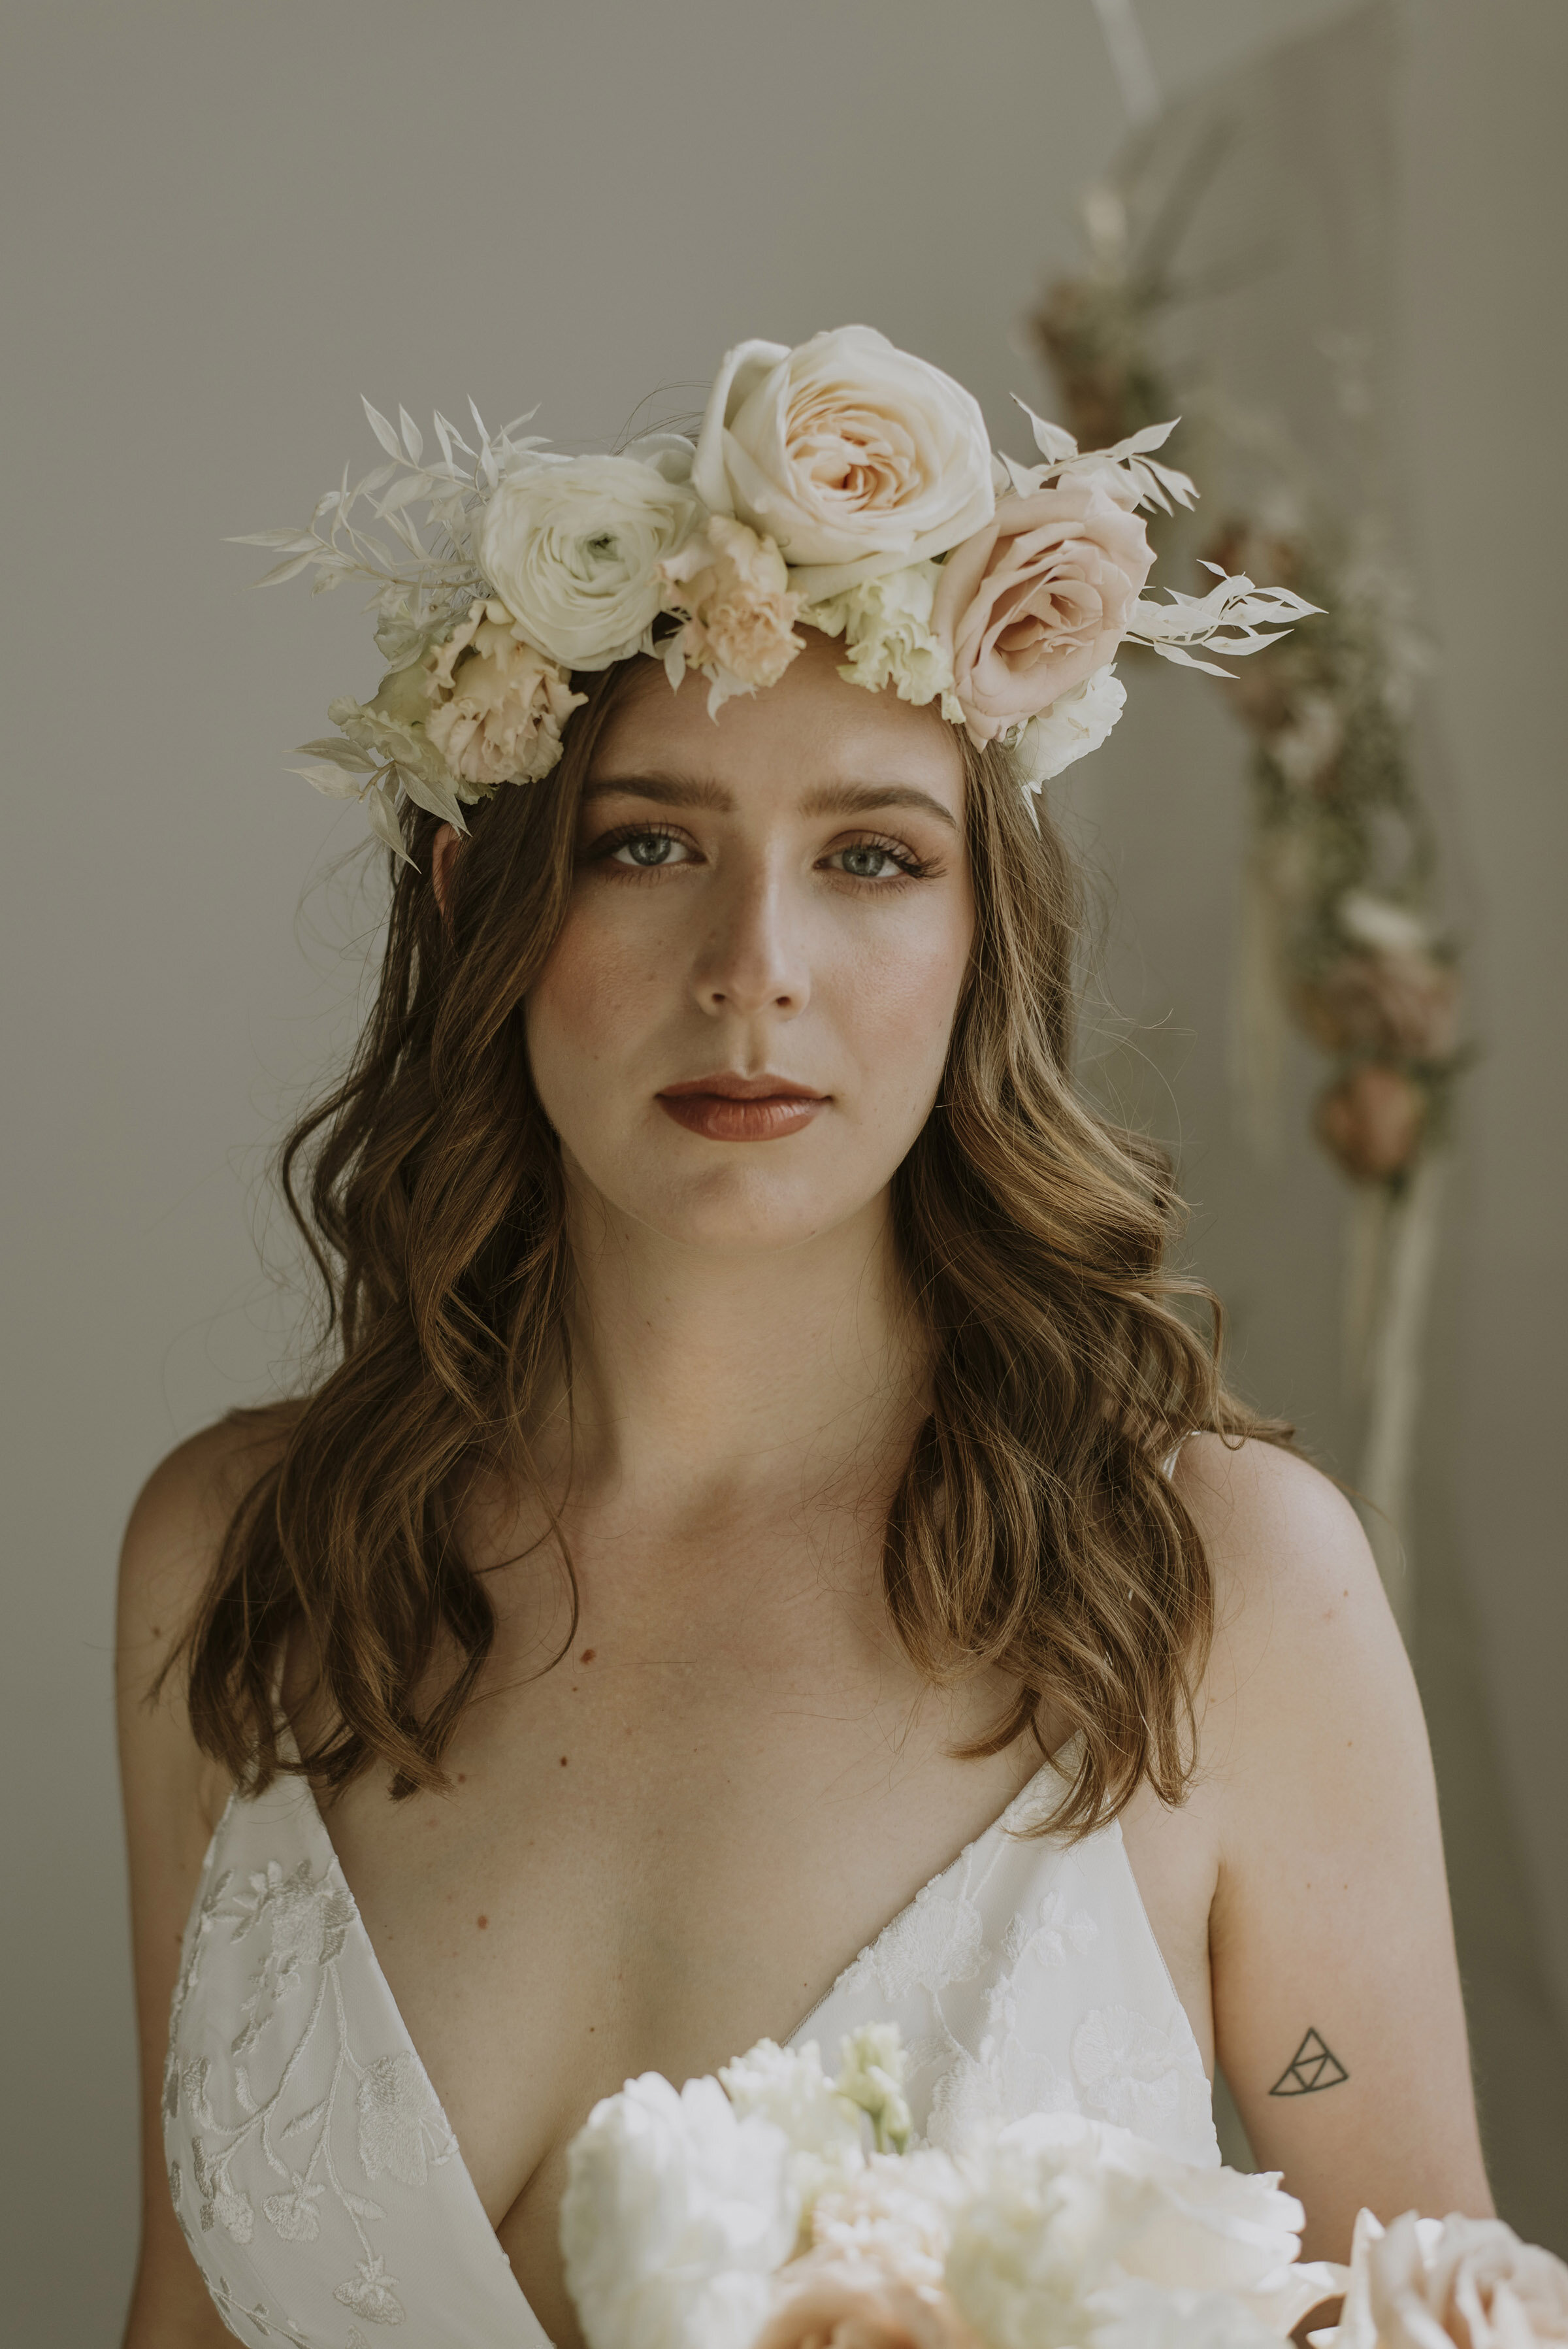 Modern Boho Bridal Inspiration Shoot - Blush and Cream Bouquet, Flower Crown, Natural Bridal Look